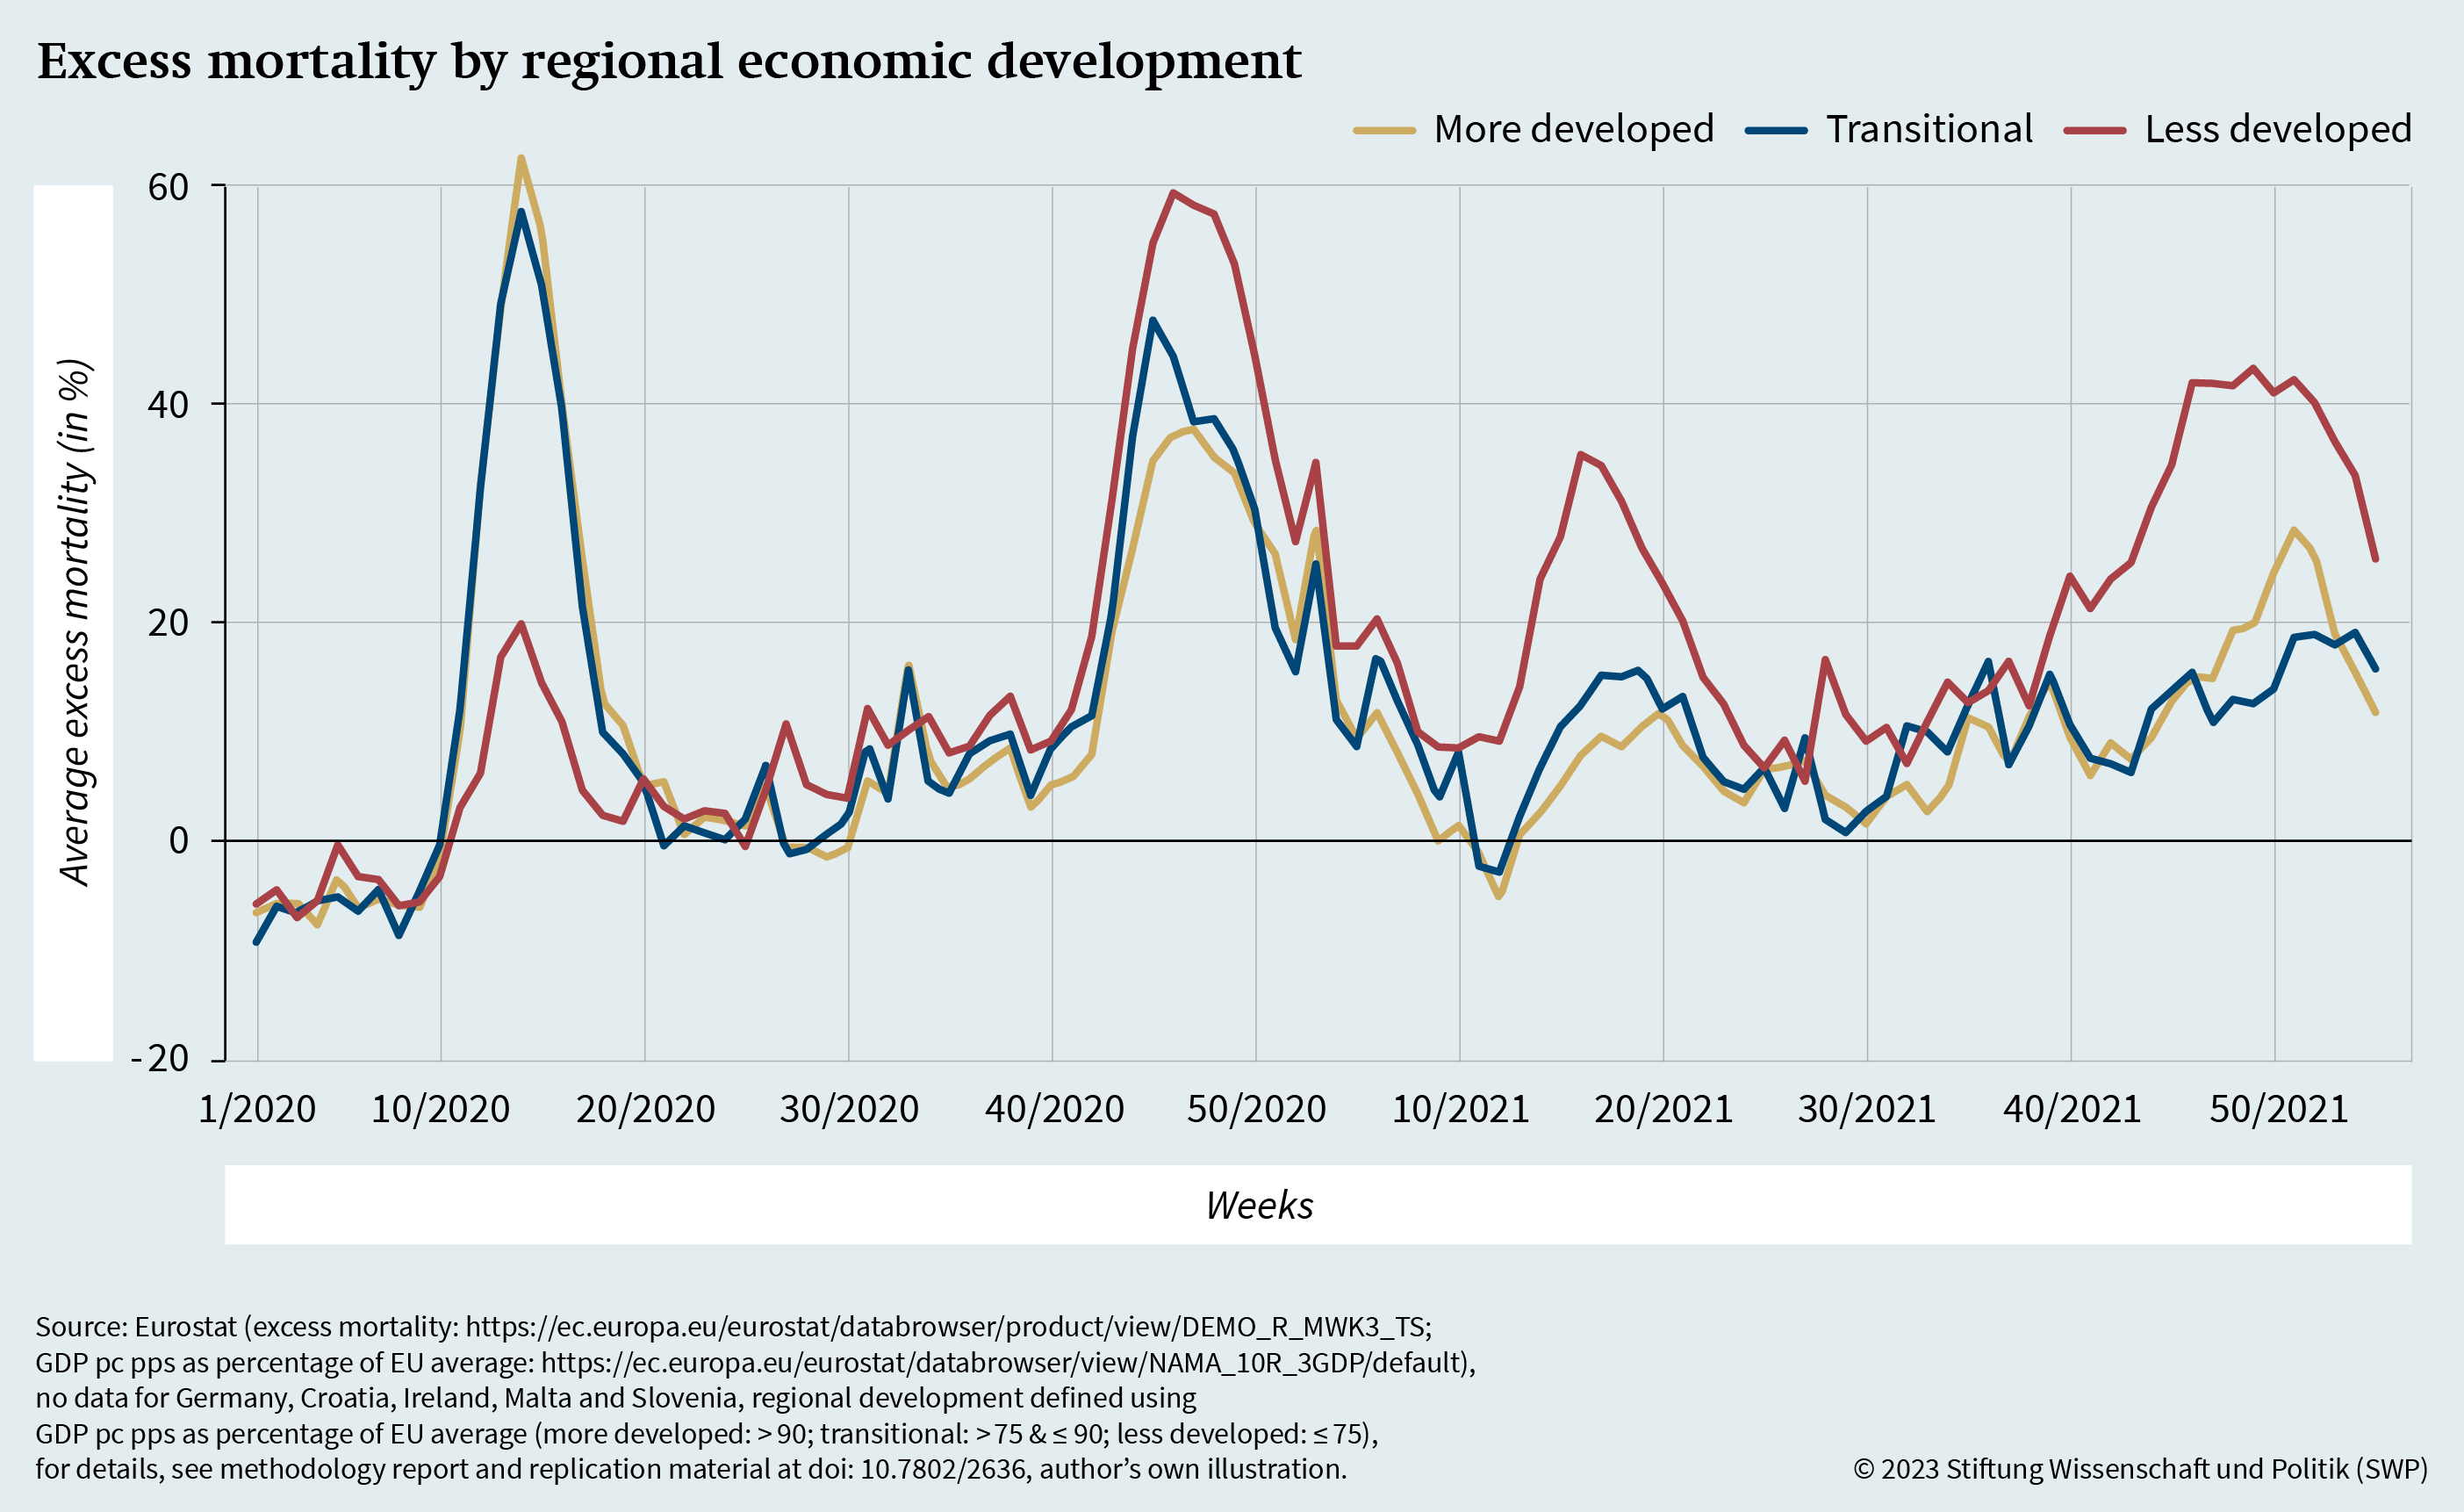 Figure 4: Excess mortality by regional economic development